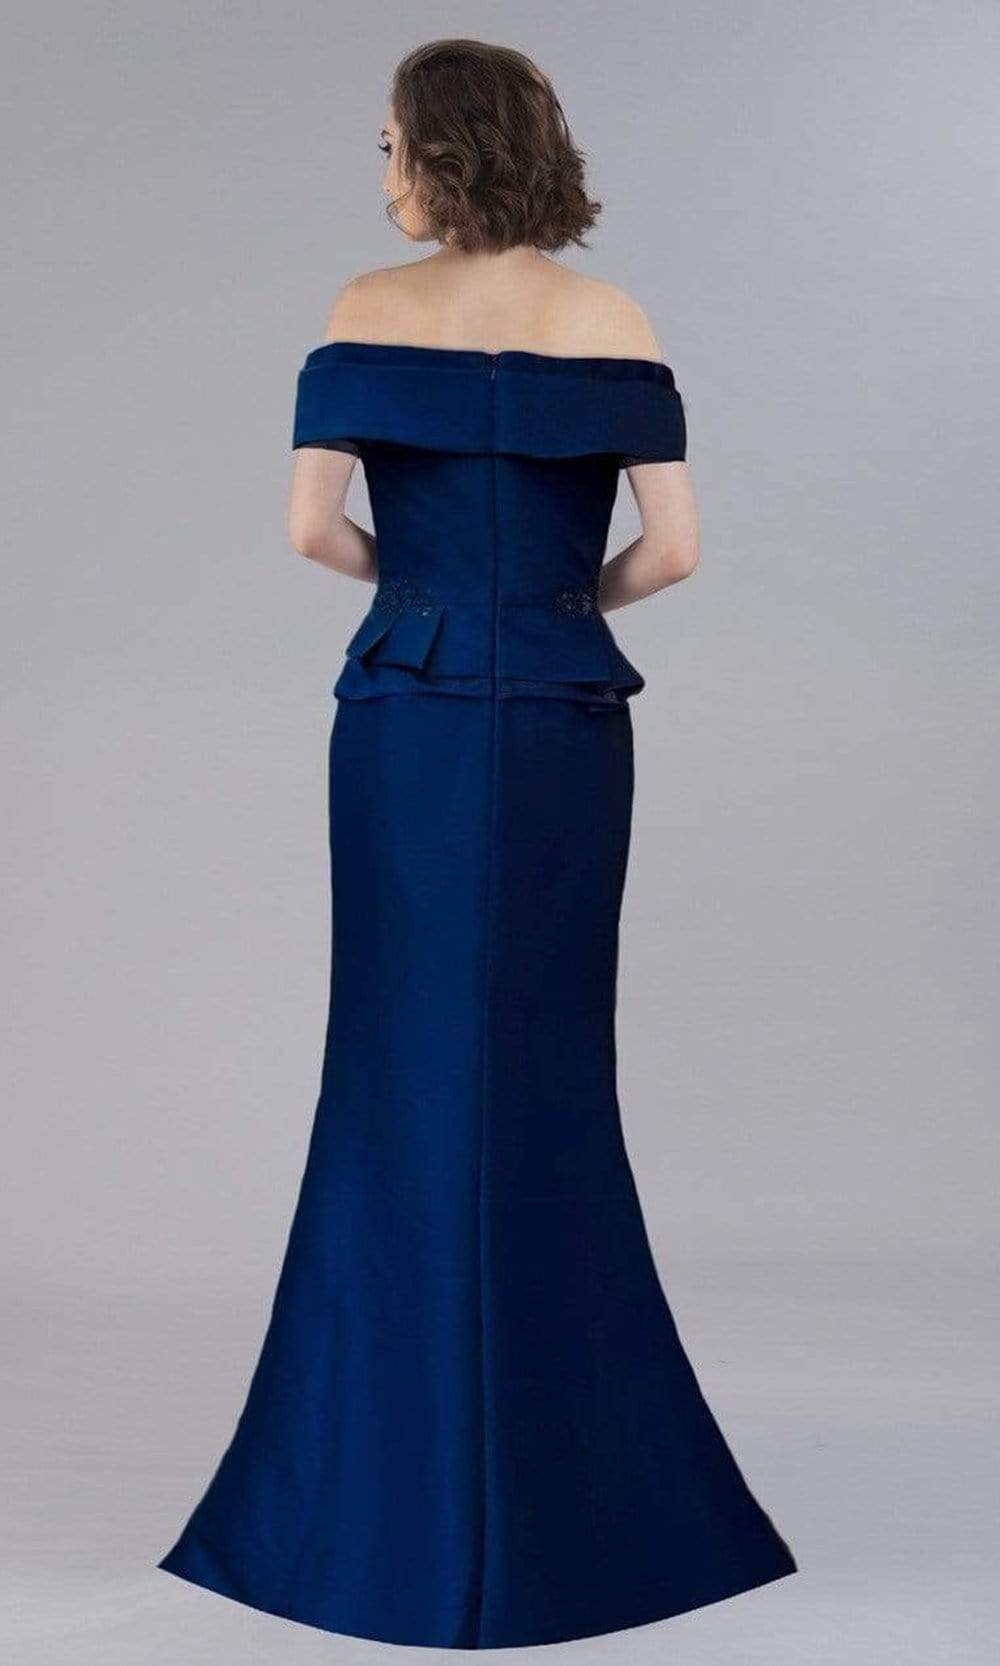 Peplum dress – Royalgene Collections